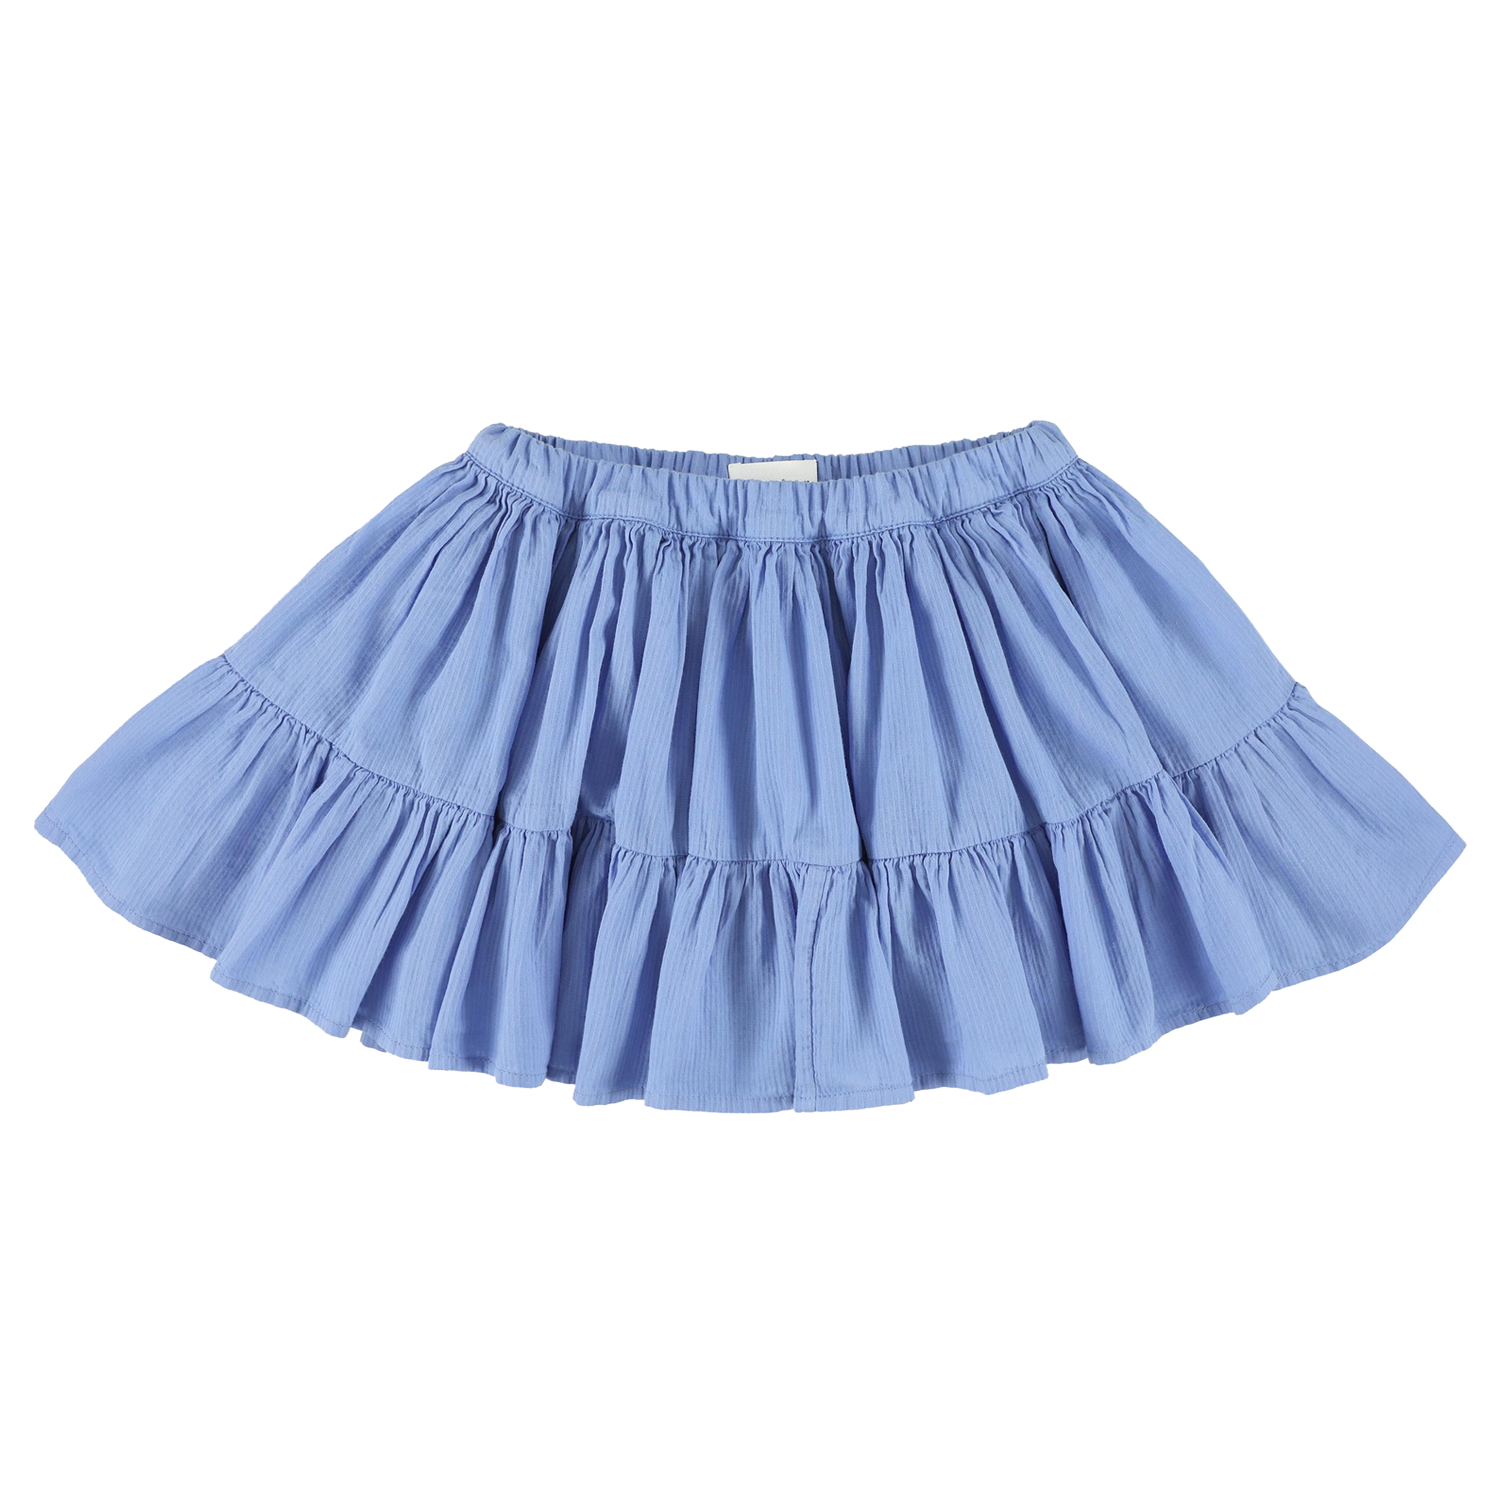 Morley Peyta Skirt - Ultramarine